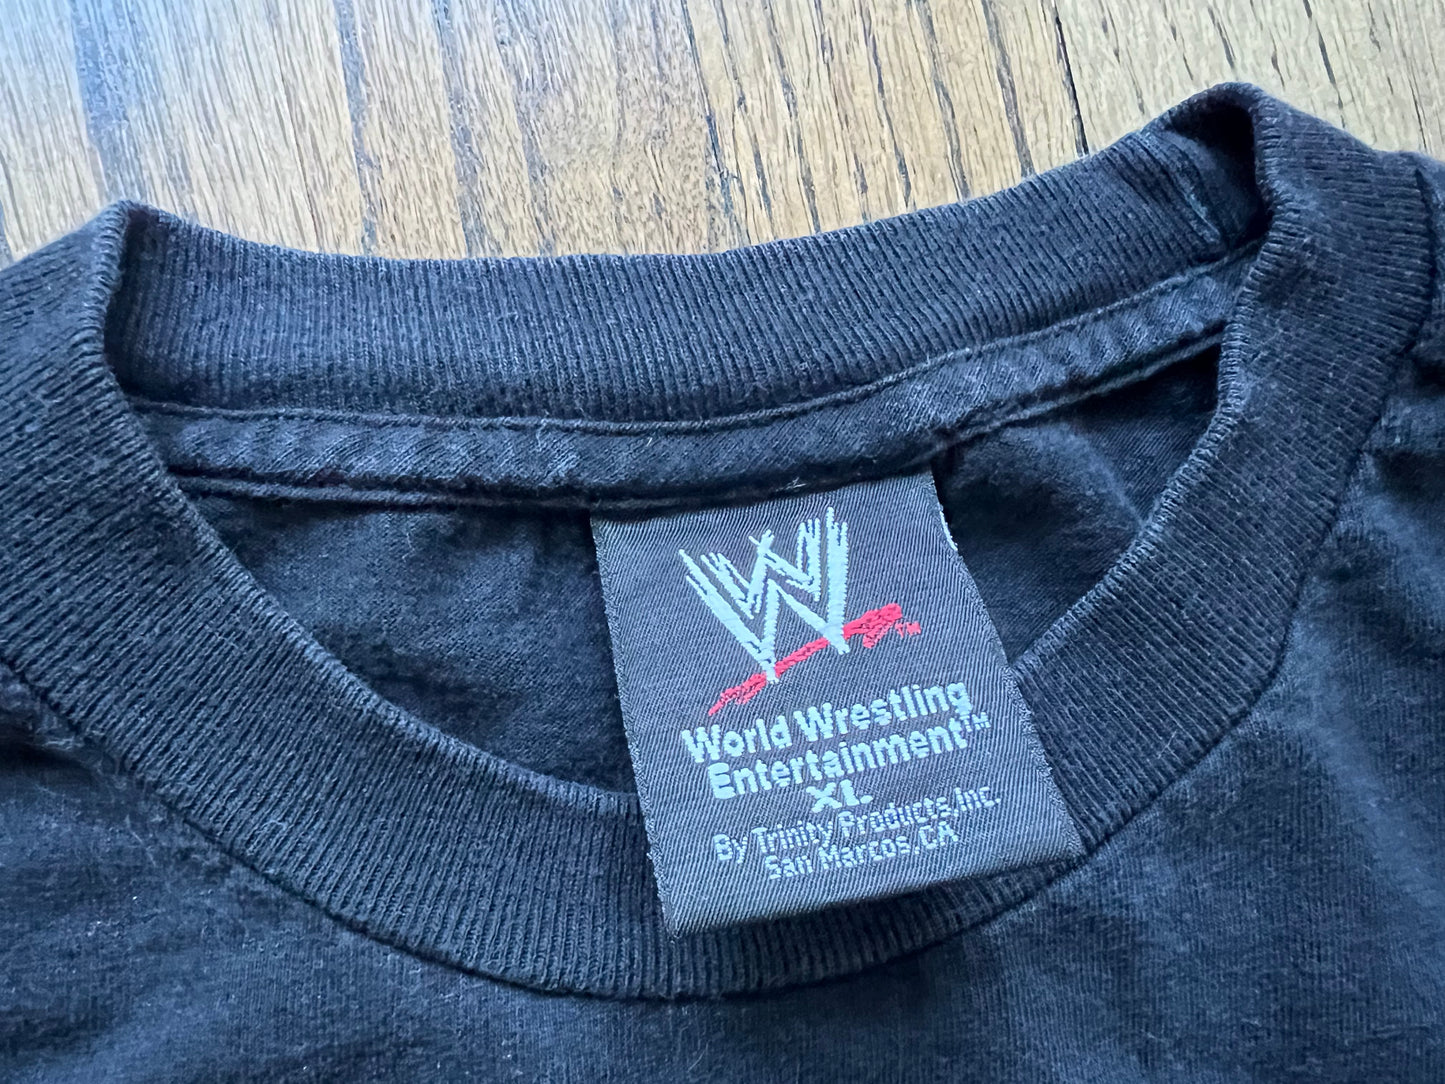 2004 WWE Wrestlemania XX shirt